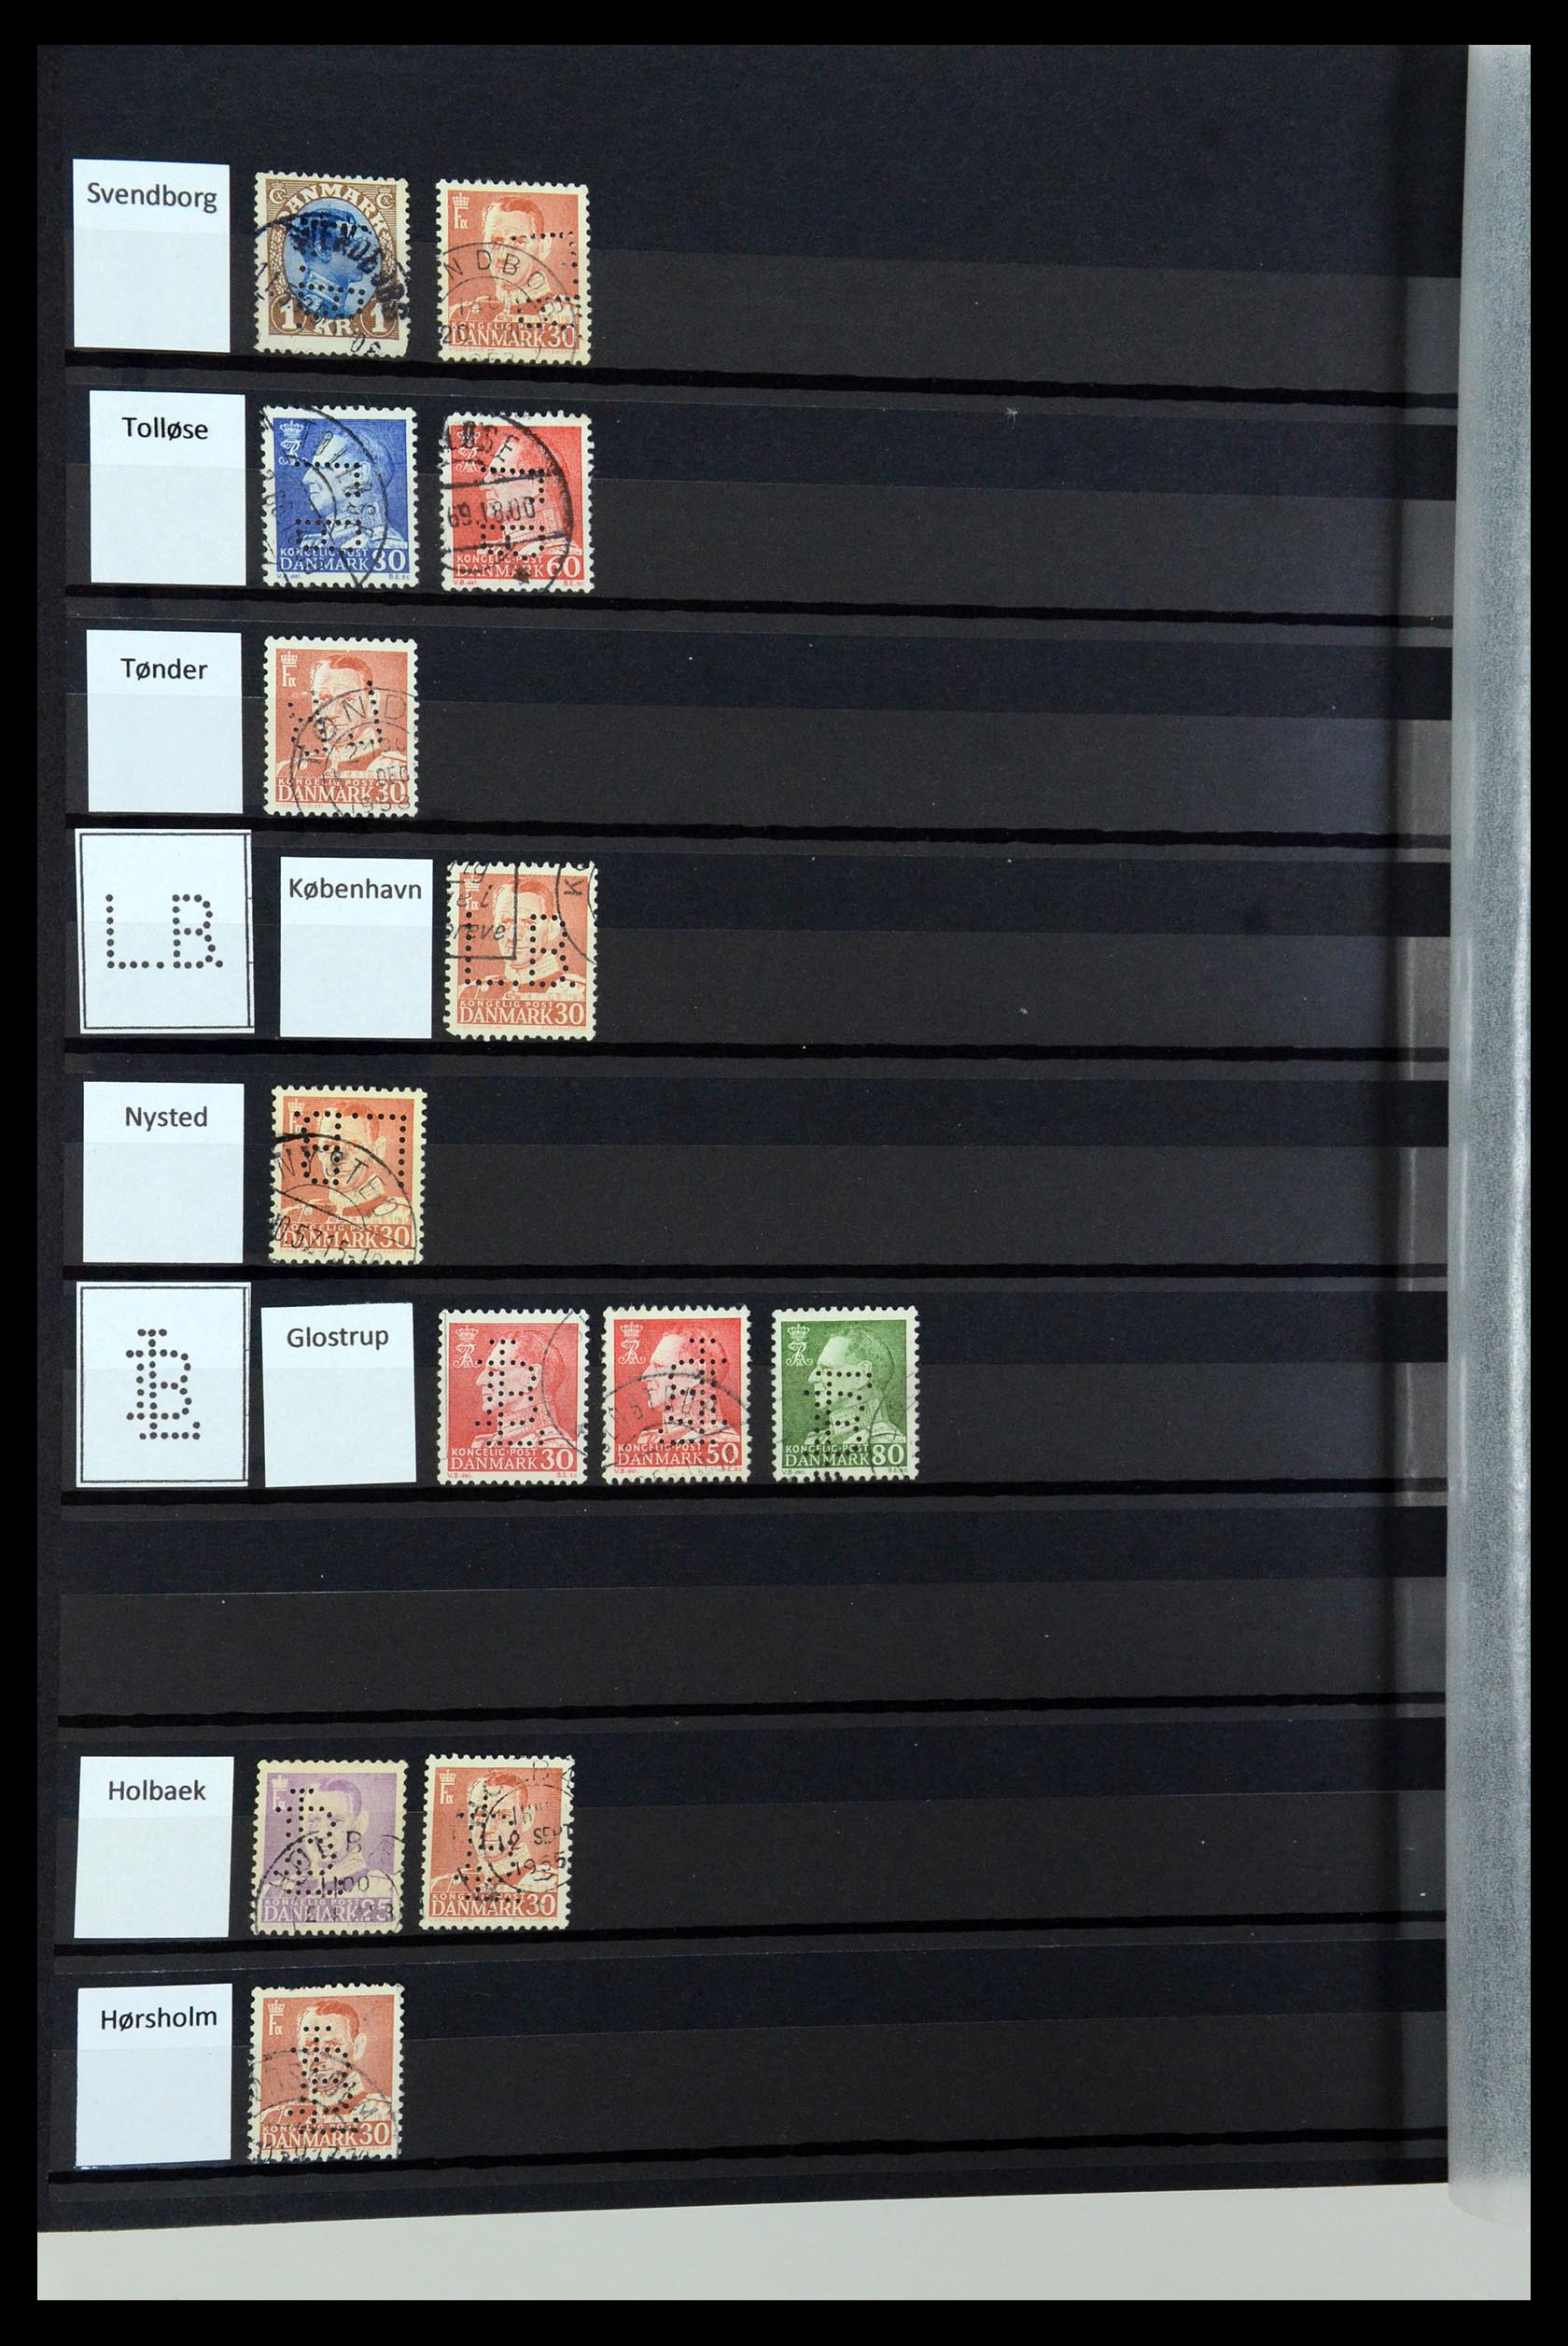 36396 087 - Stamp collection 36396 Denmark perfins.